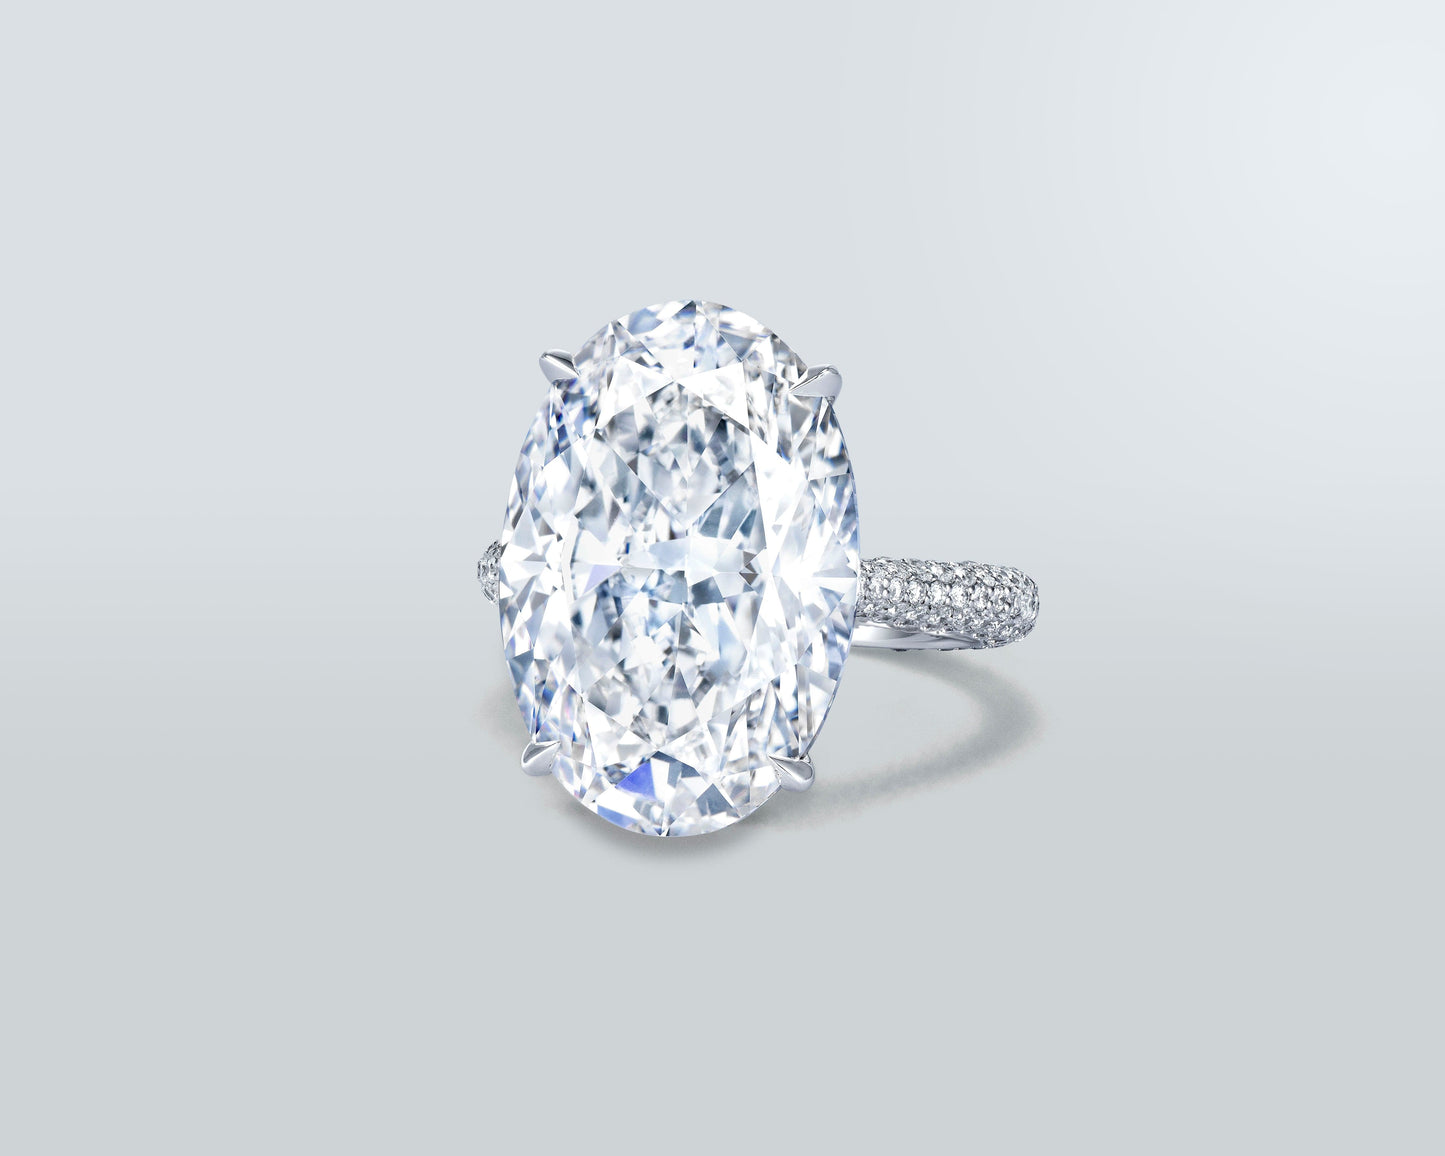 13.29 carat Oval Shape Diamond Ring